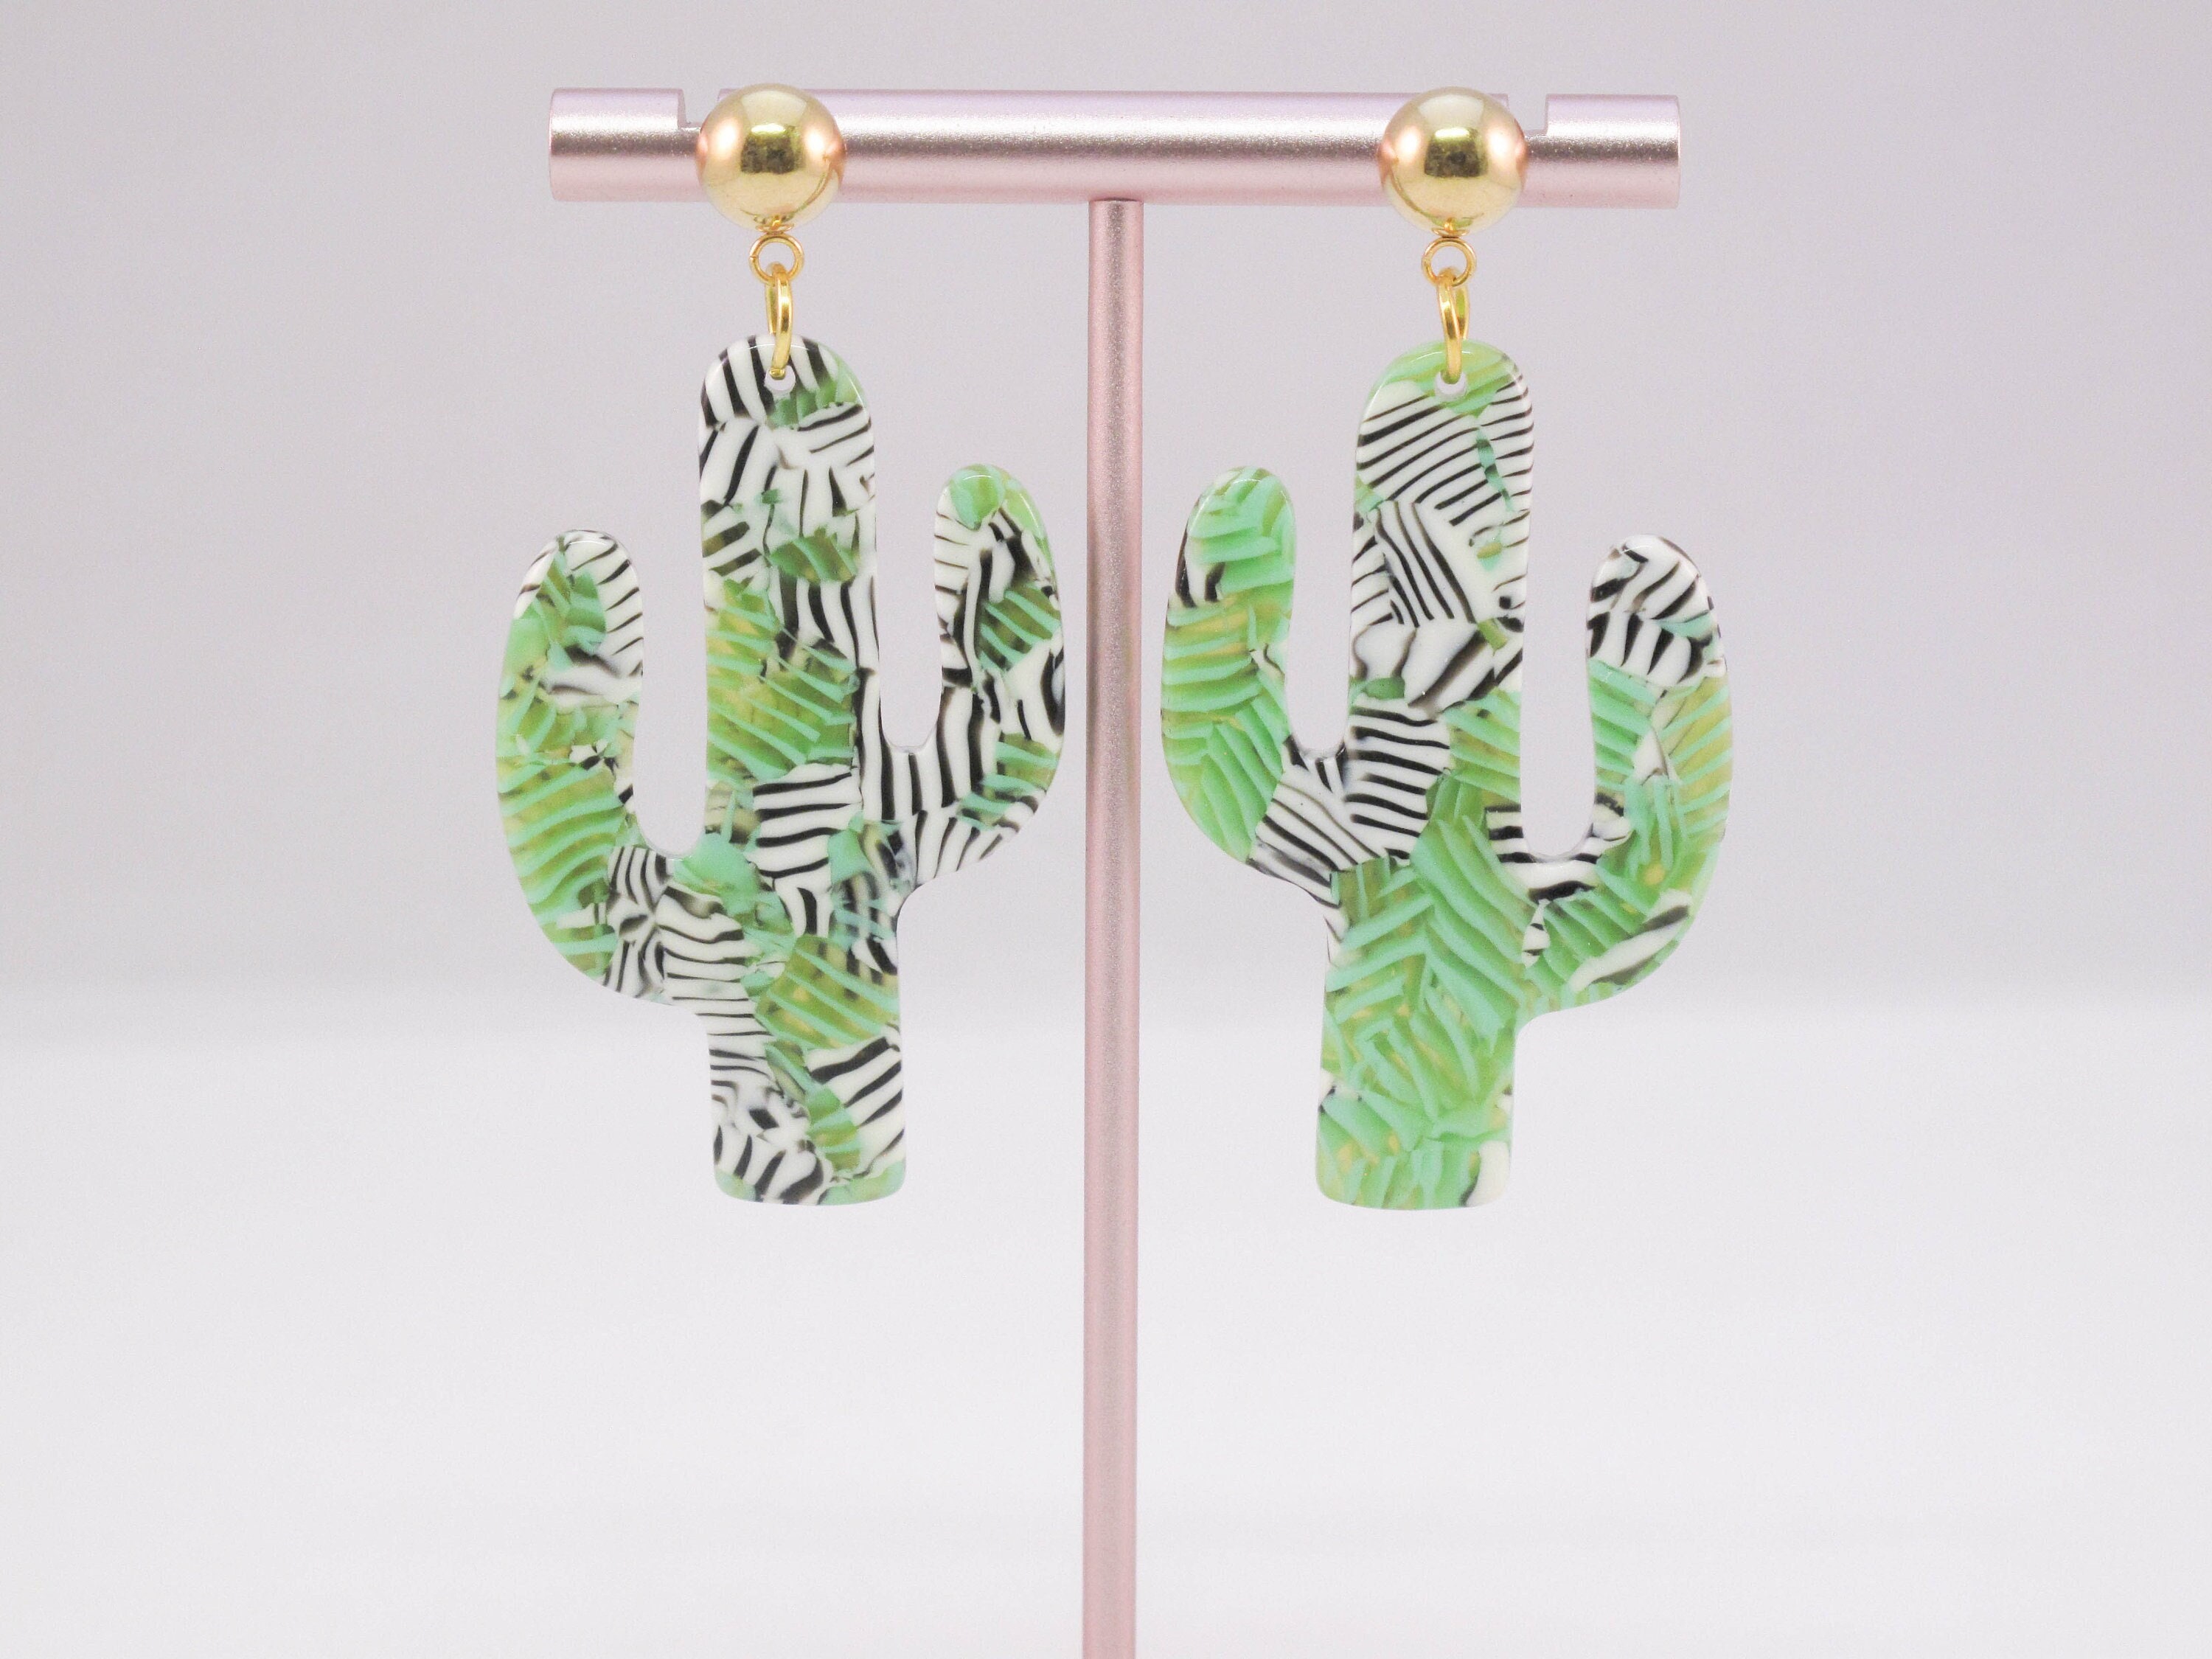 Giant Silver Cactus Earrings